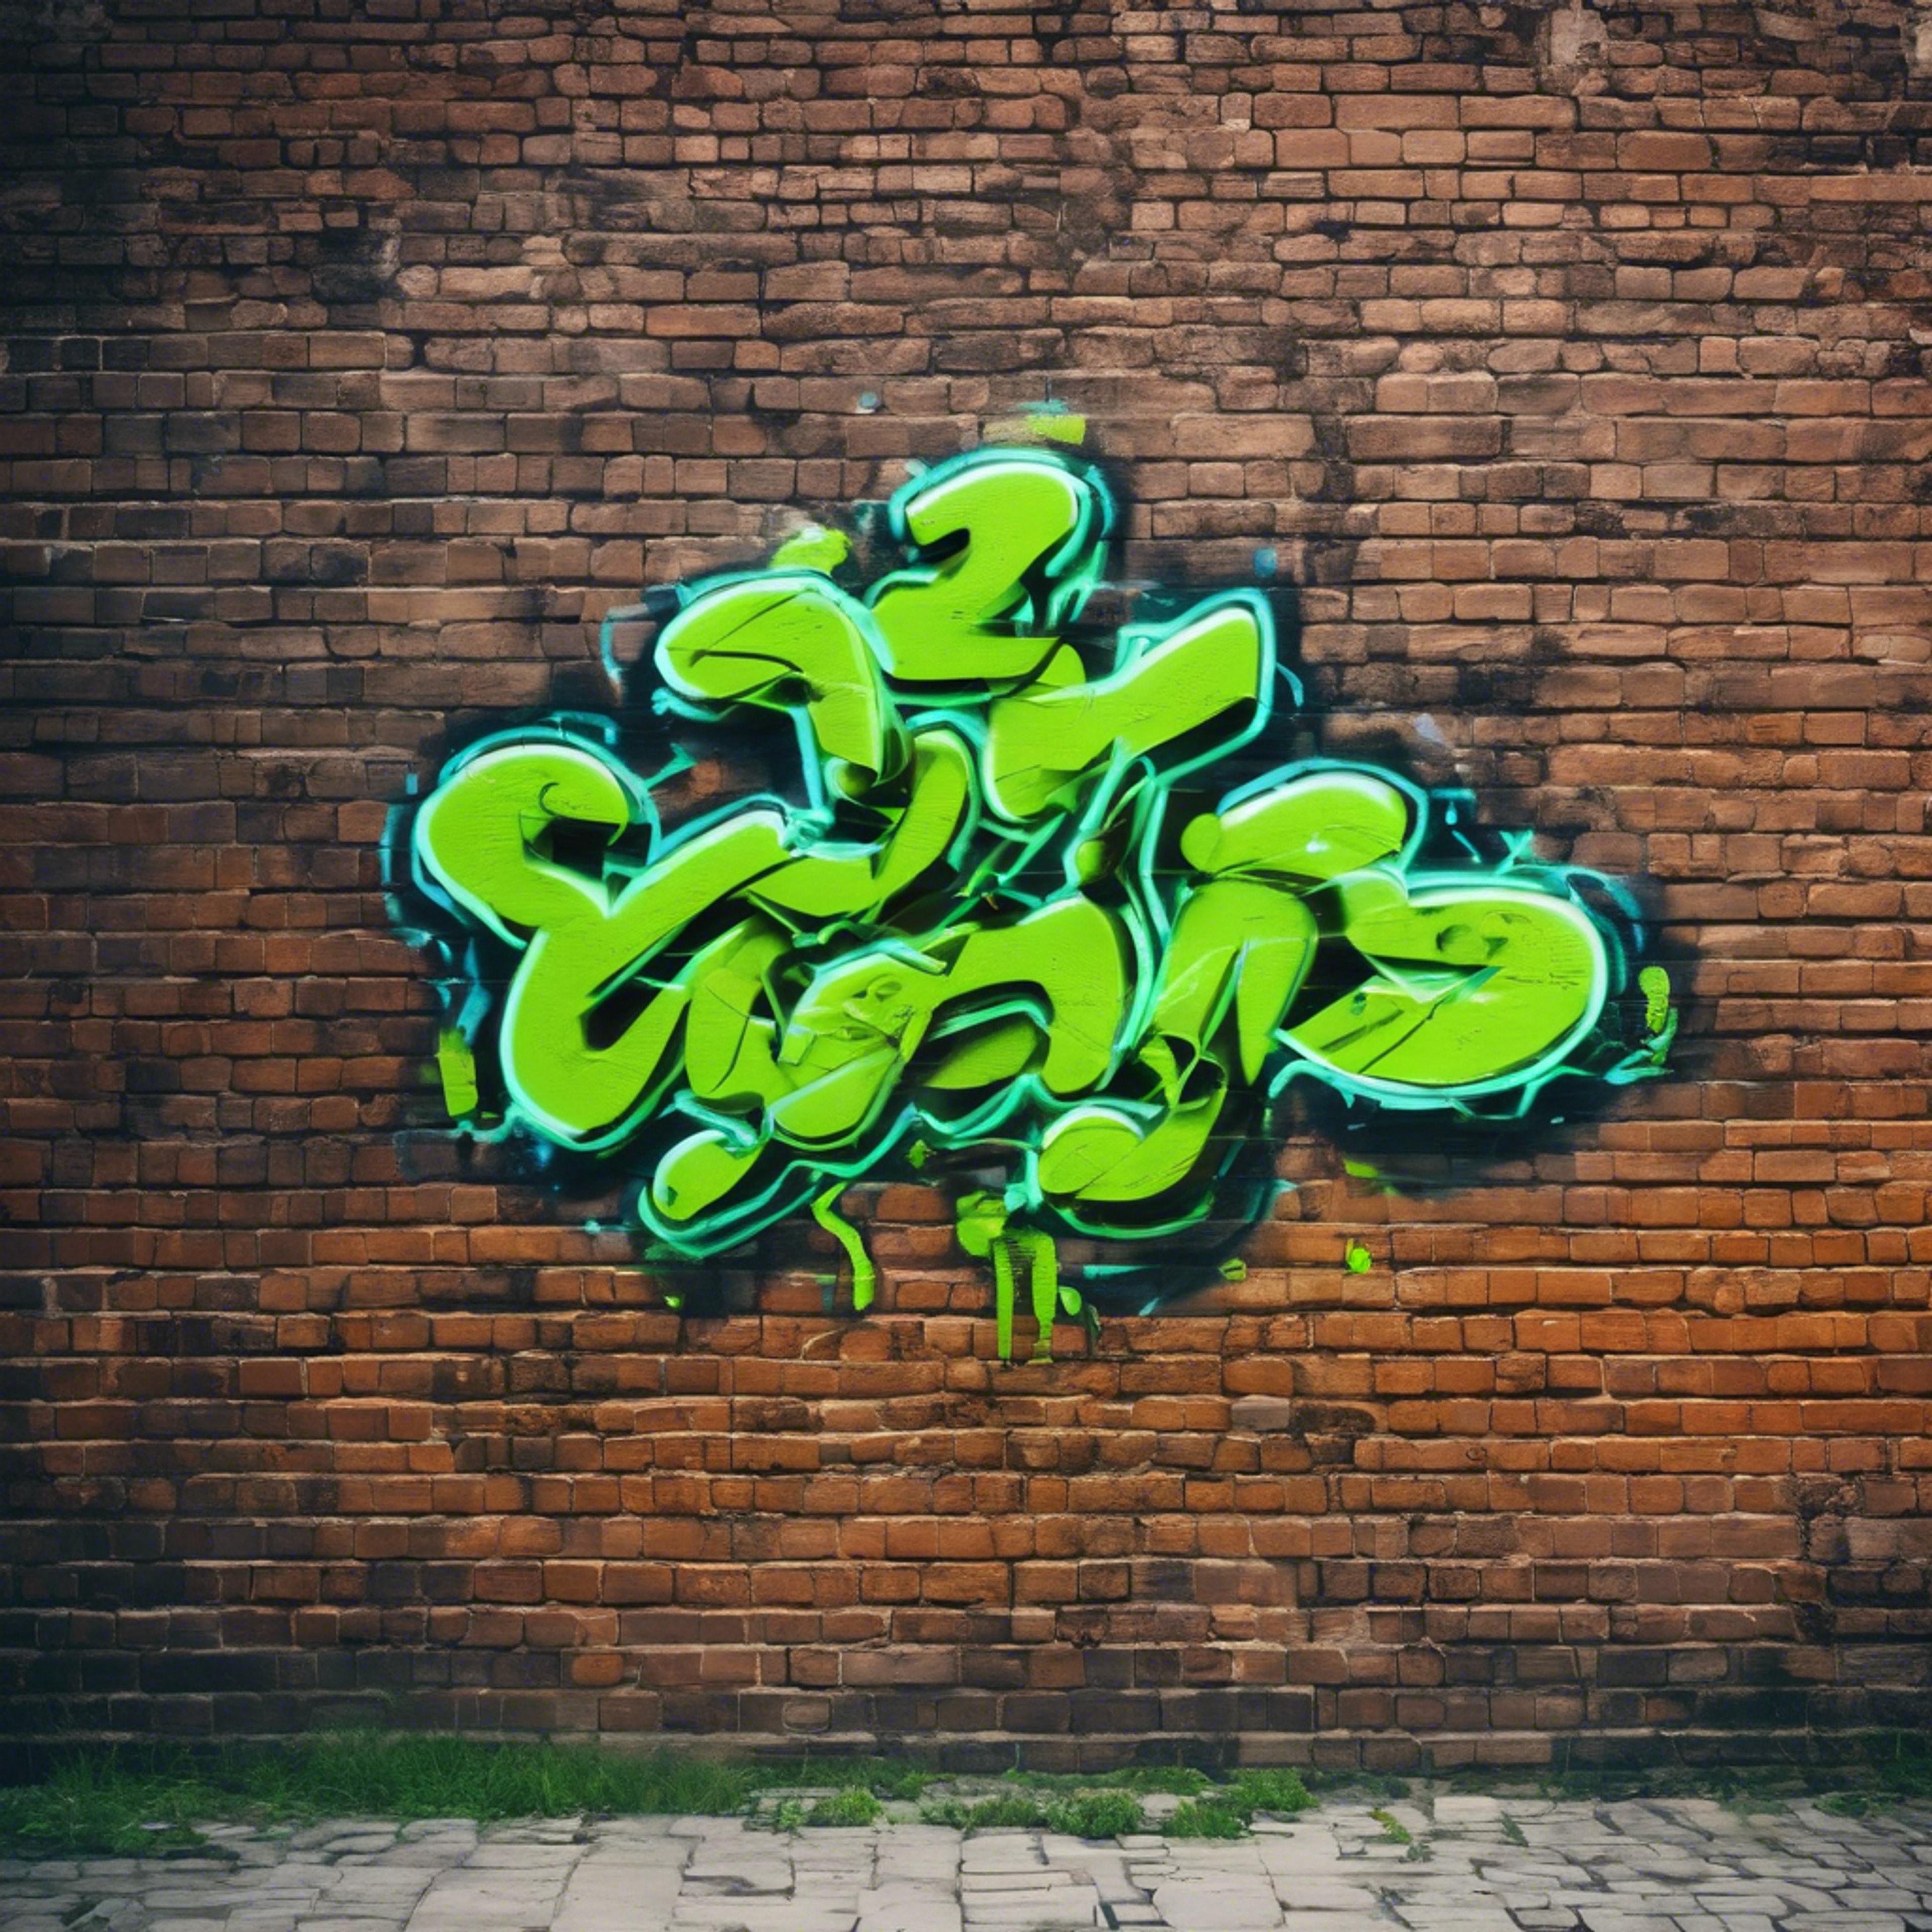 Cool neon green graffiti on an old brick wall in an urban setting. 墙纸[8032604dbabf4a1691c6]